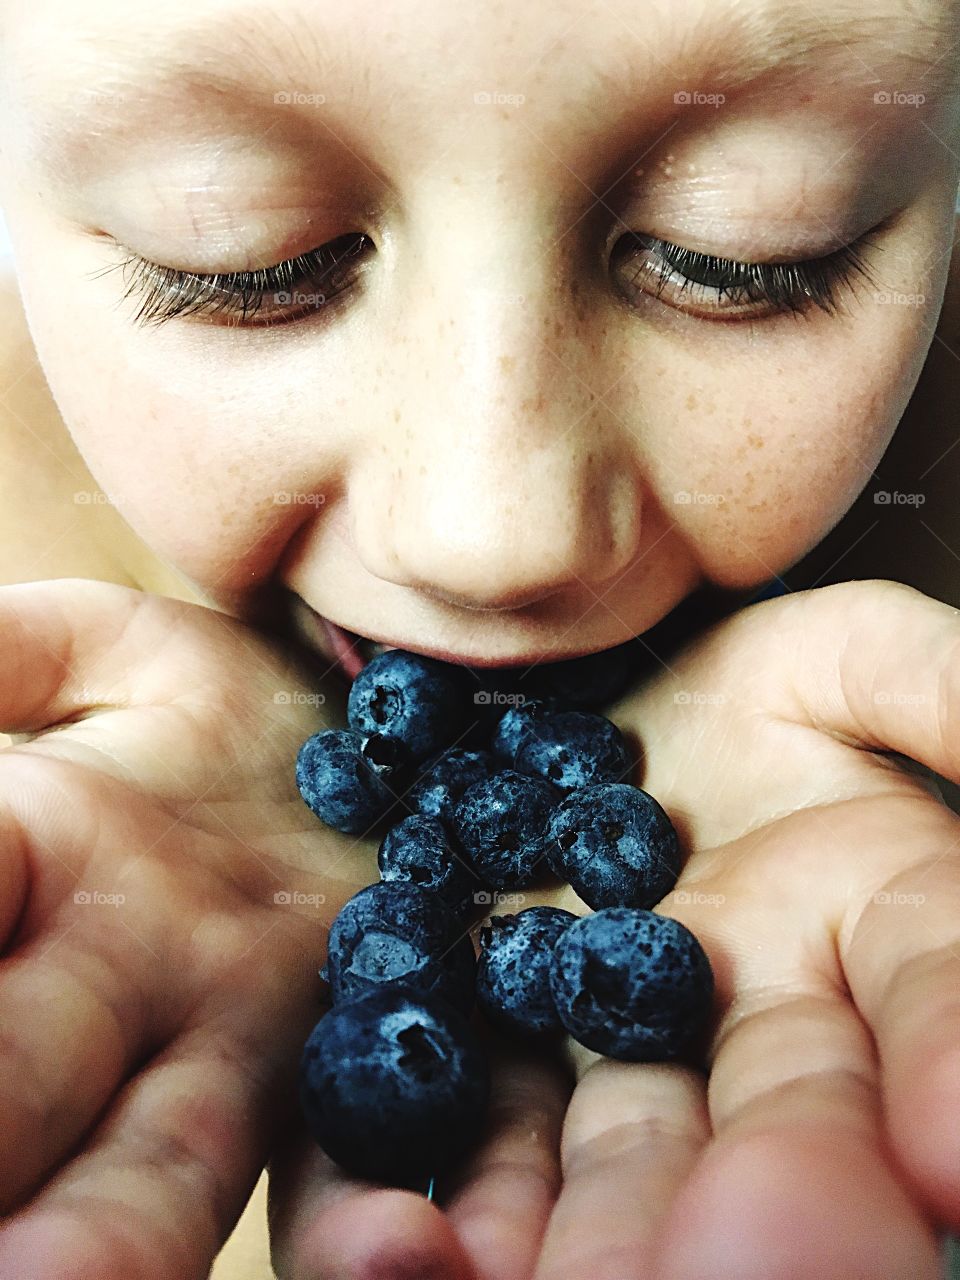 Eating blueberries